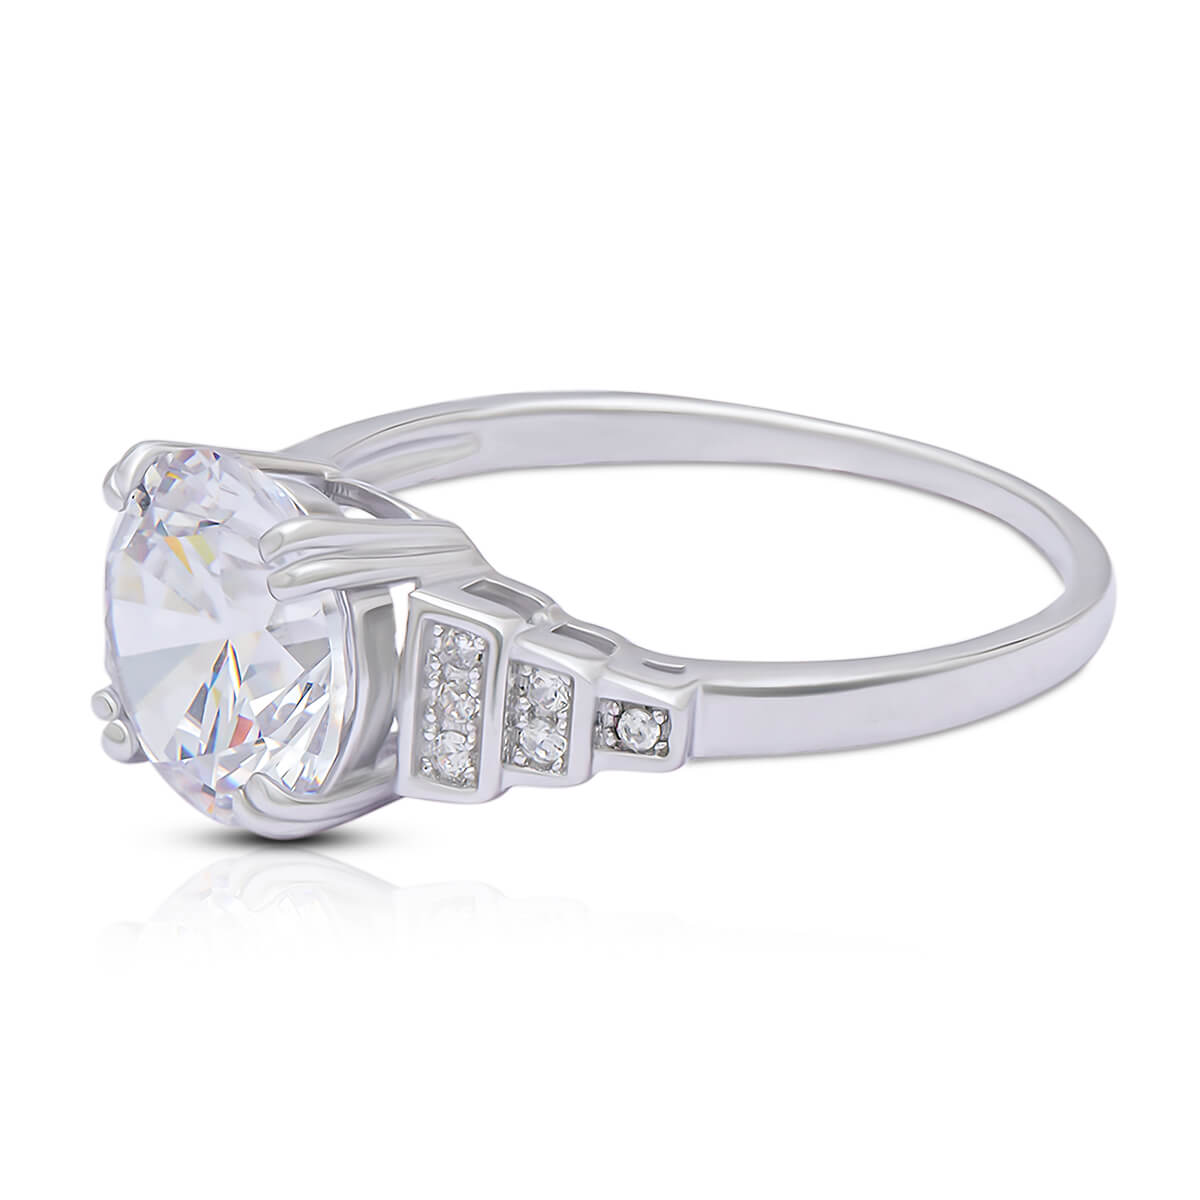 Alluring Silver Diamond Ring